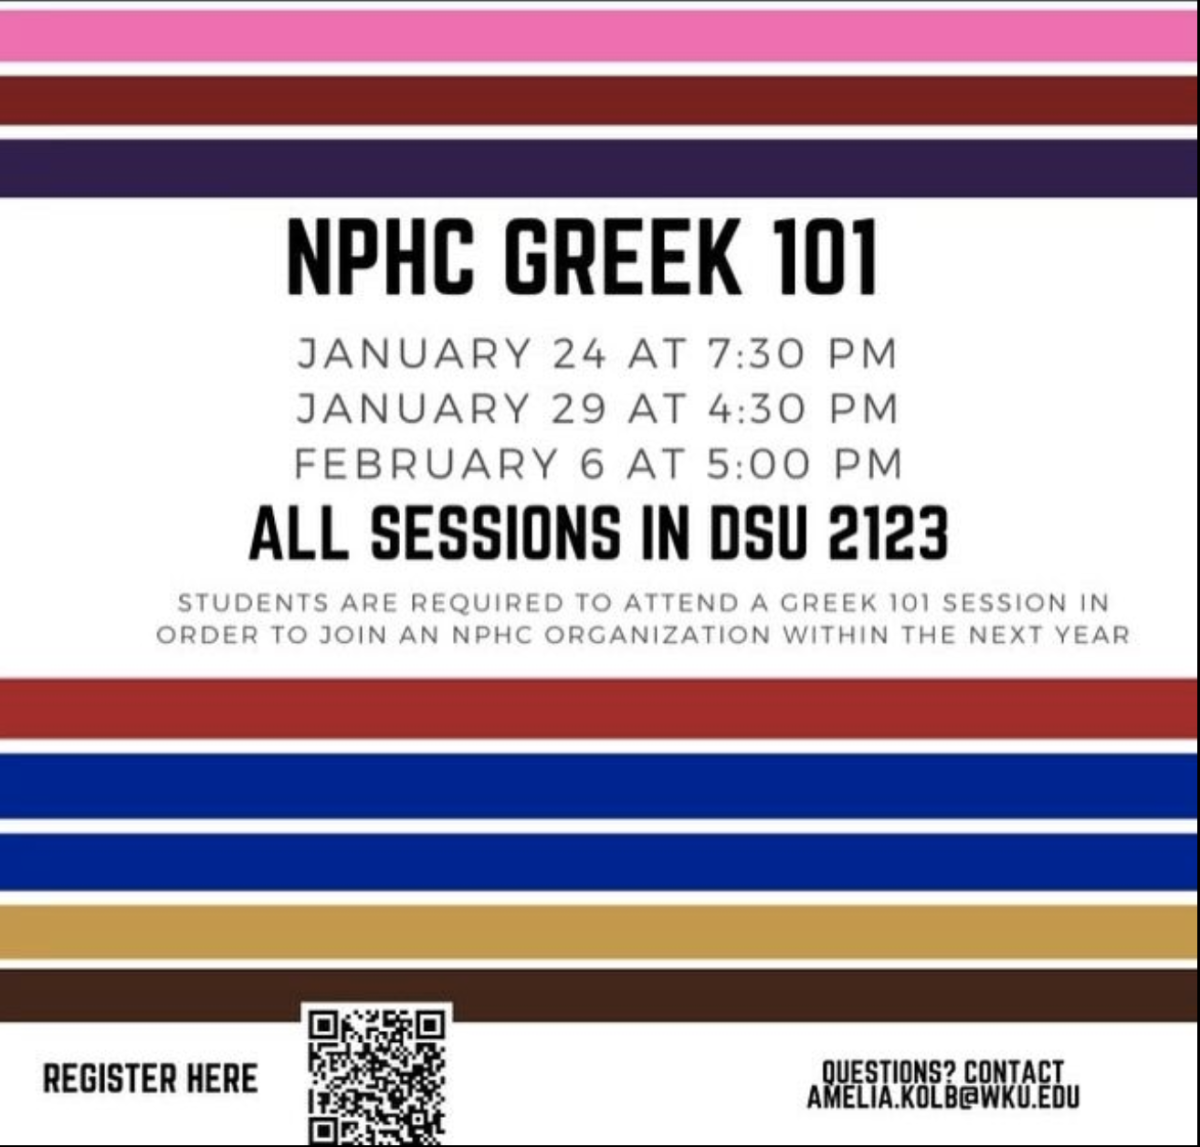 NPHC organizations host Greek 101 sessions